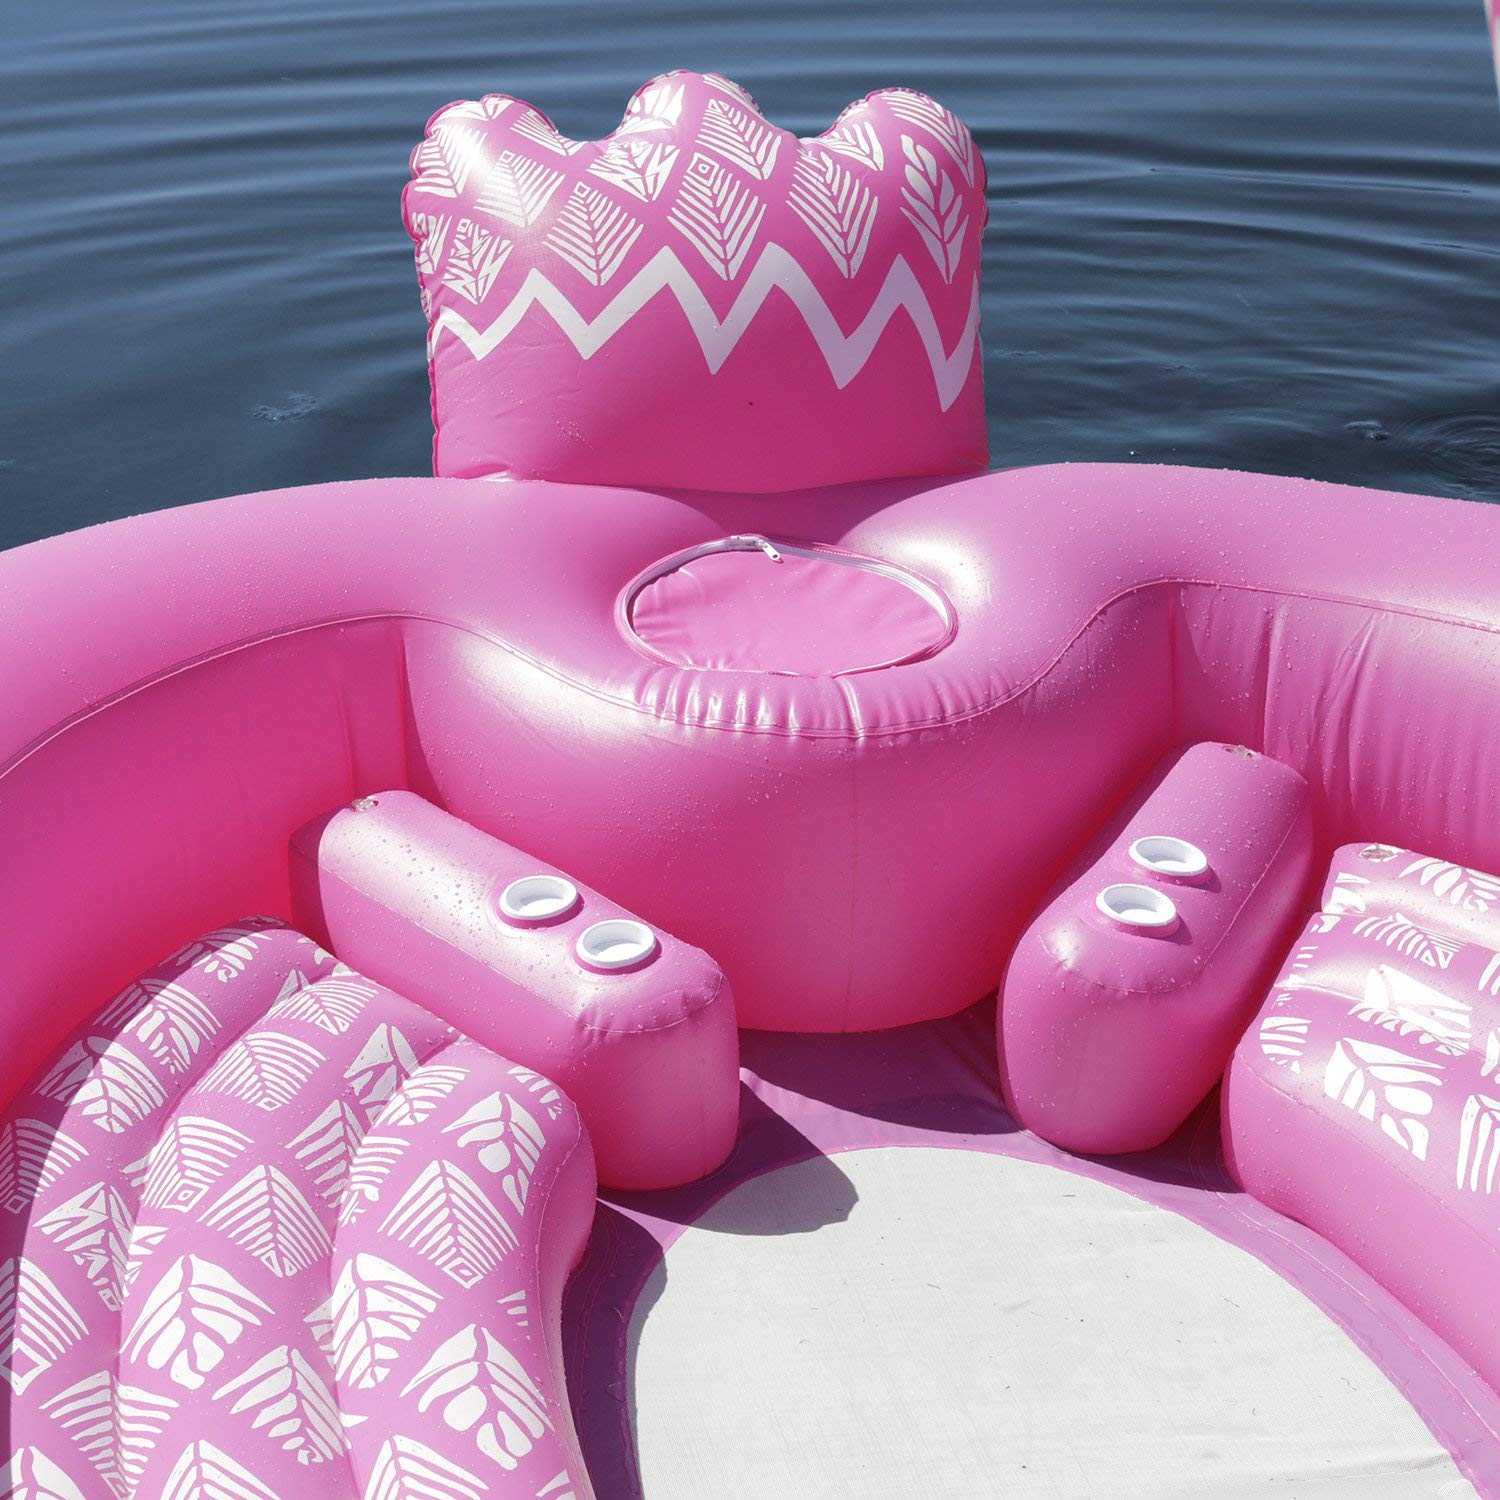 Giant Flamingo Float